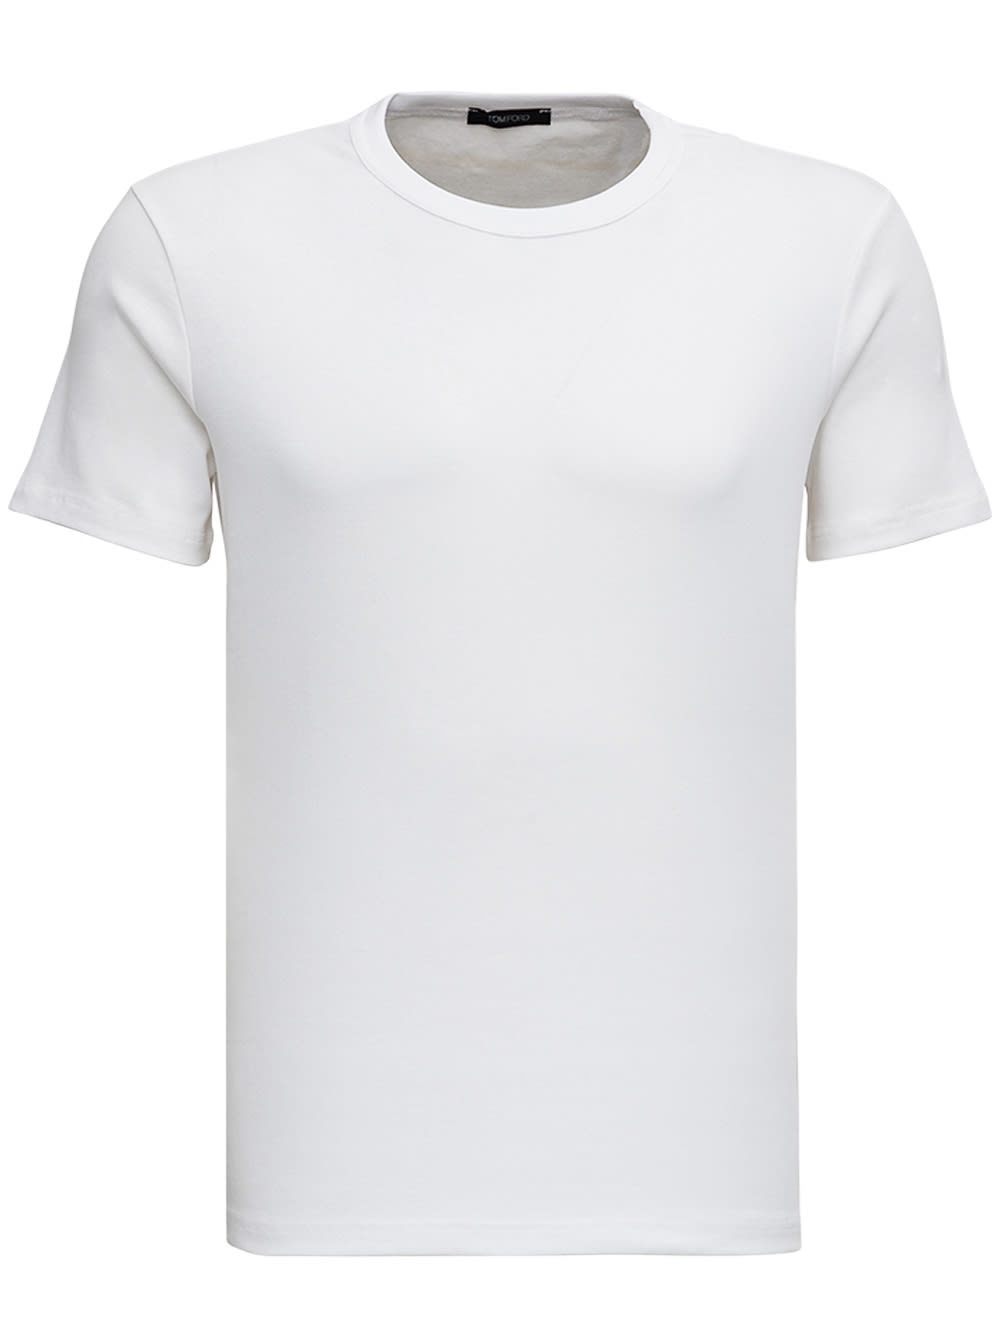 Tom Ford White Stretch Cotton Crew Neck T-shirt